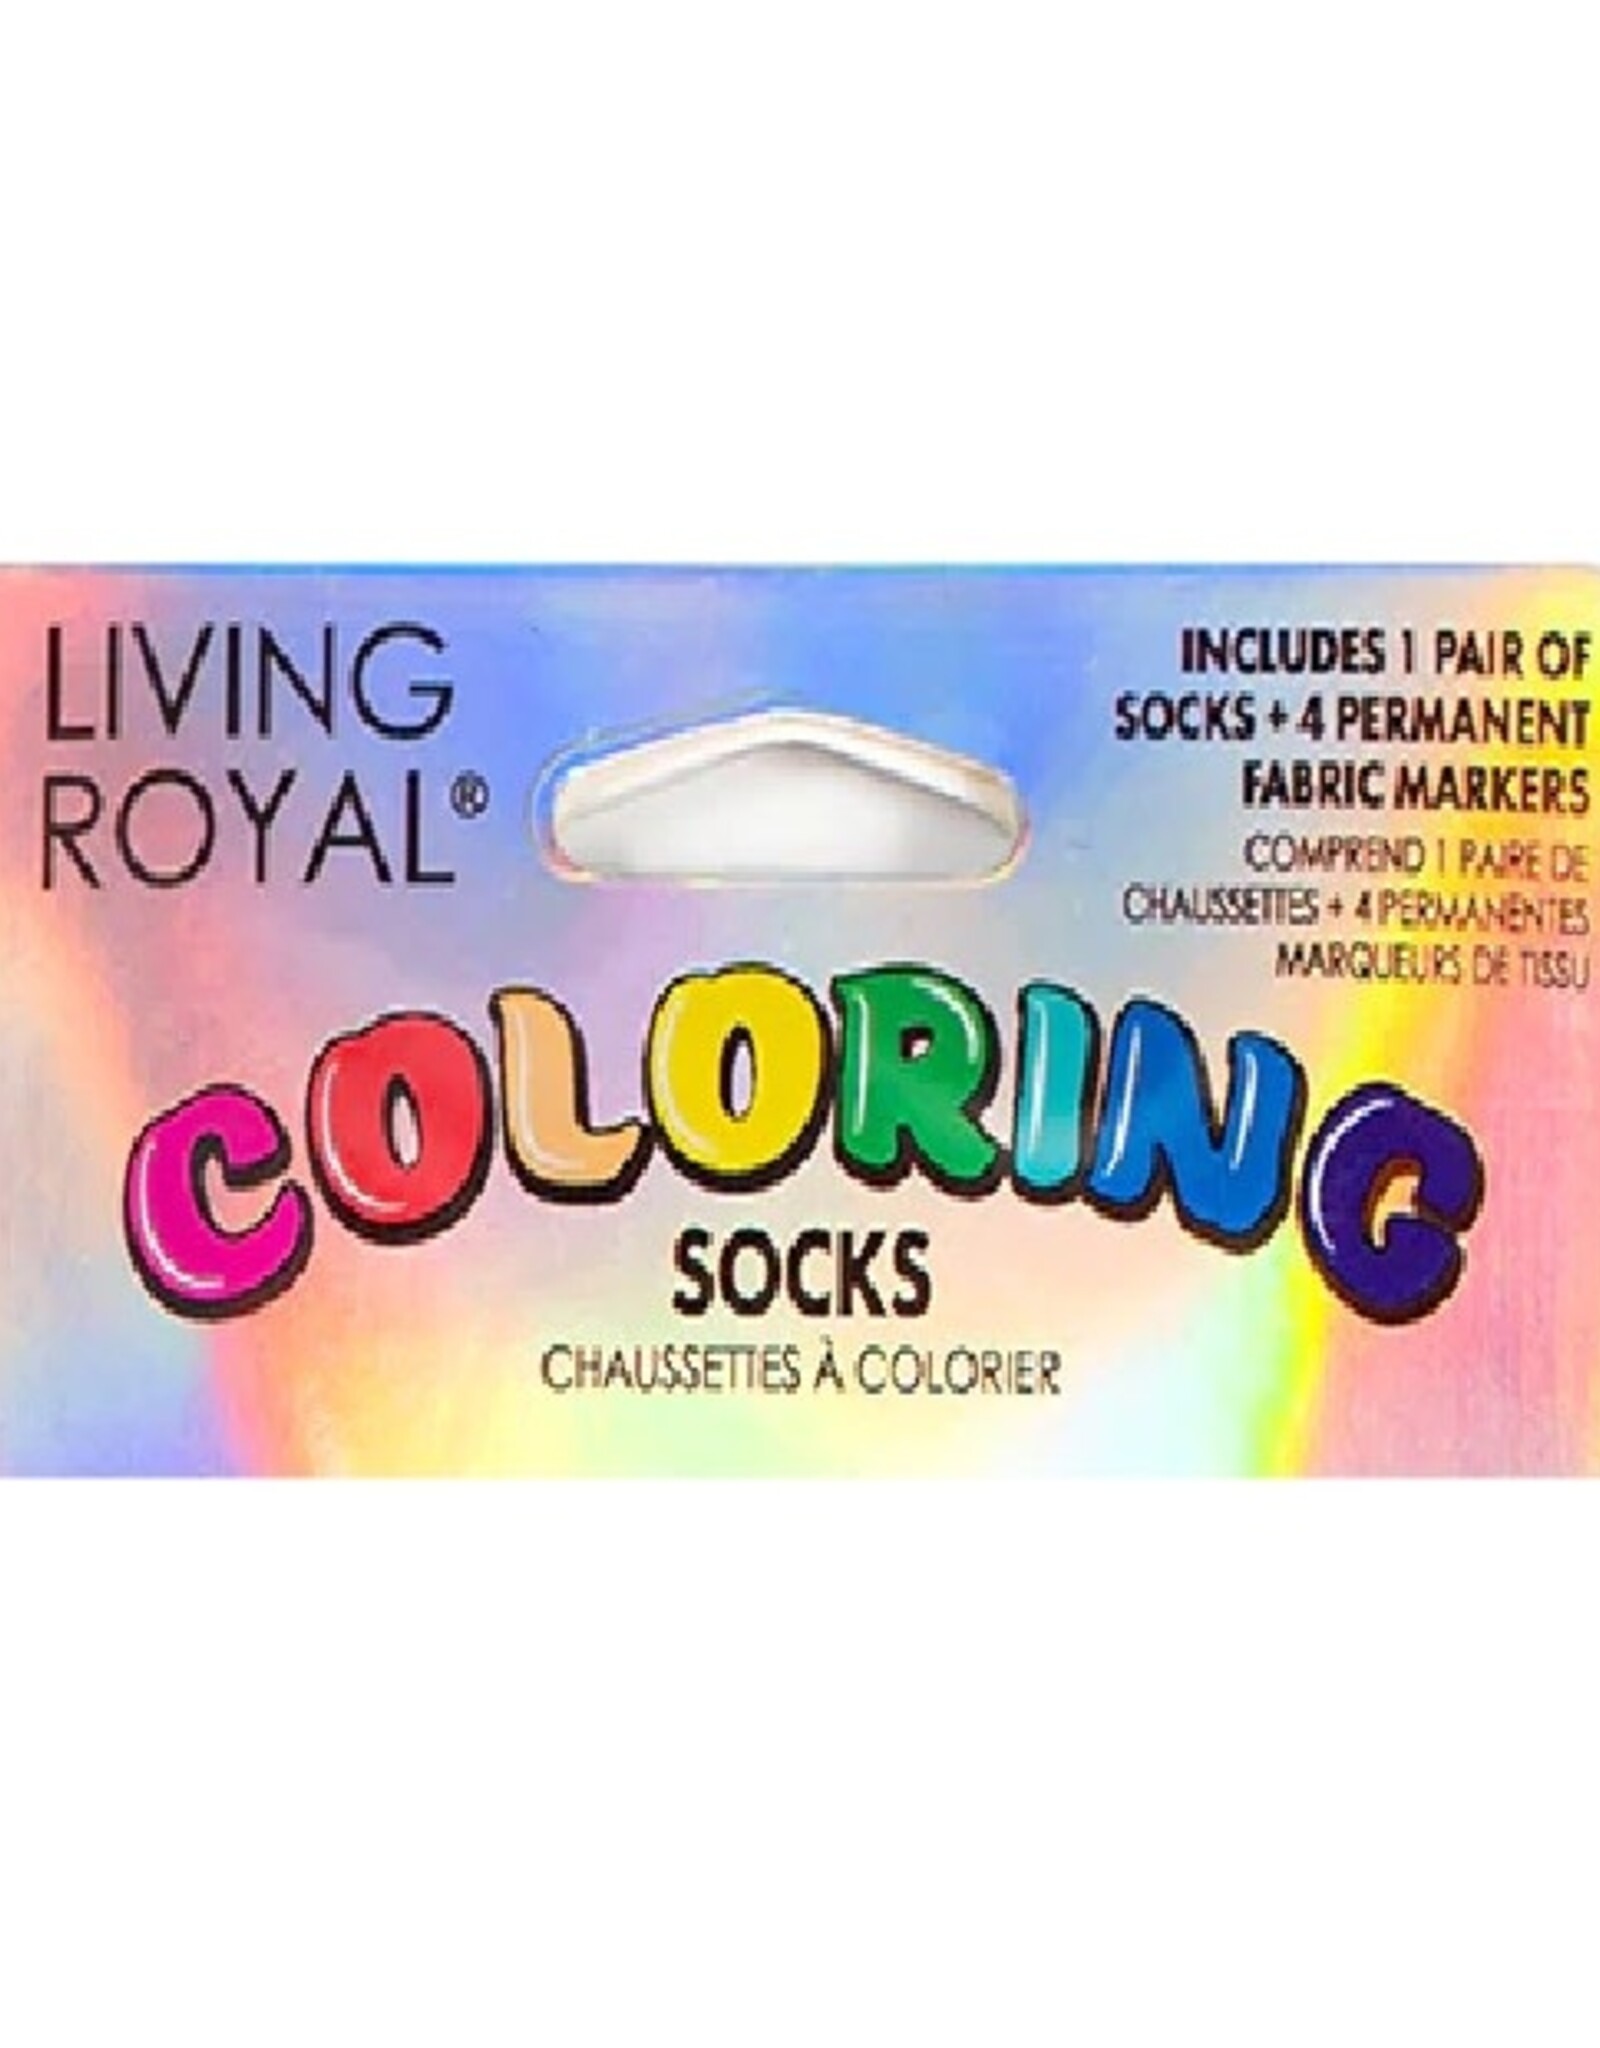 Living Royal Coloring Socks